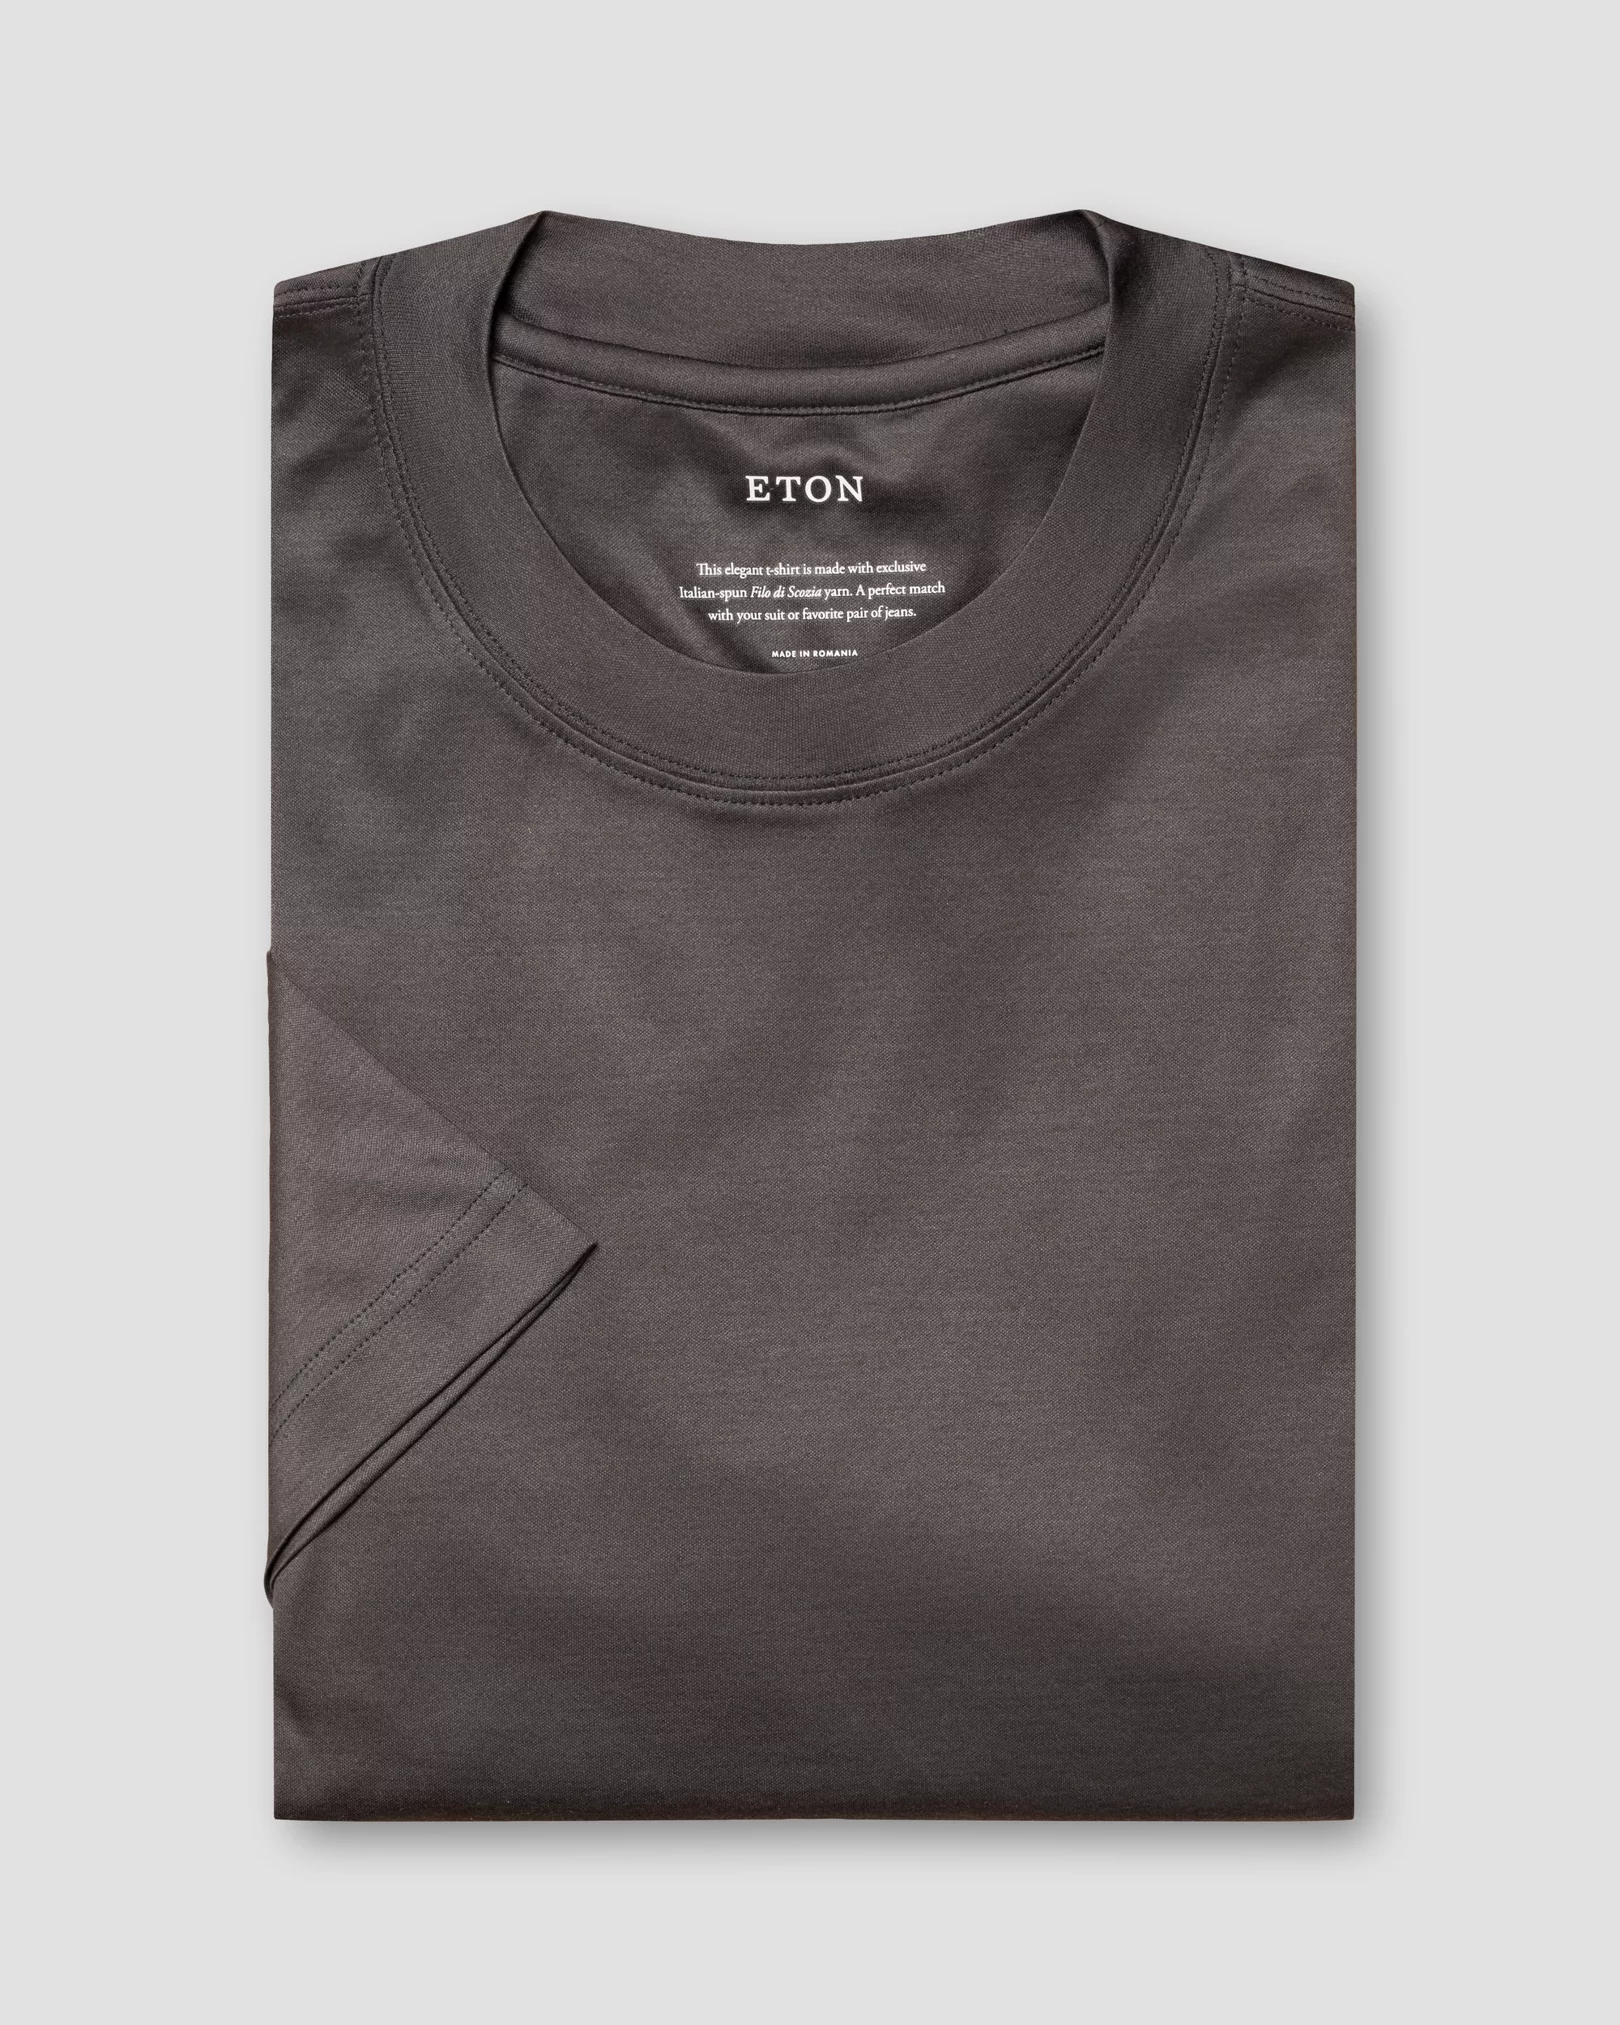 Eton - mid grey jersey t shirt short sleeve